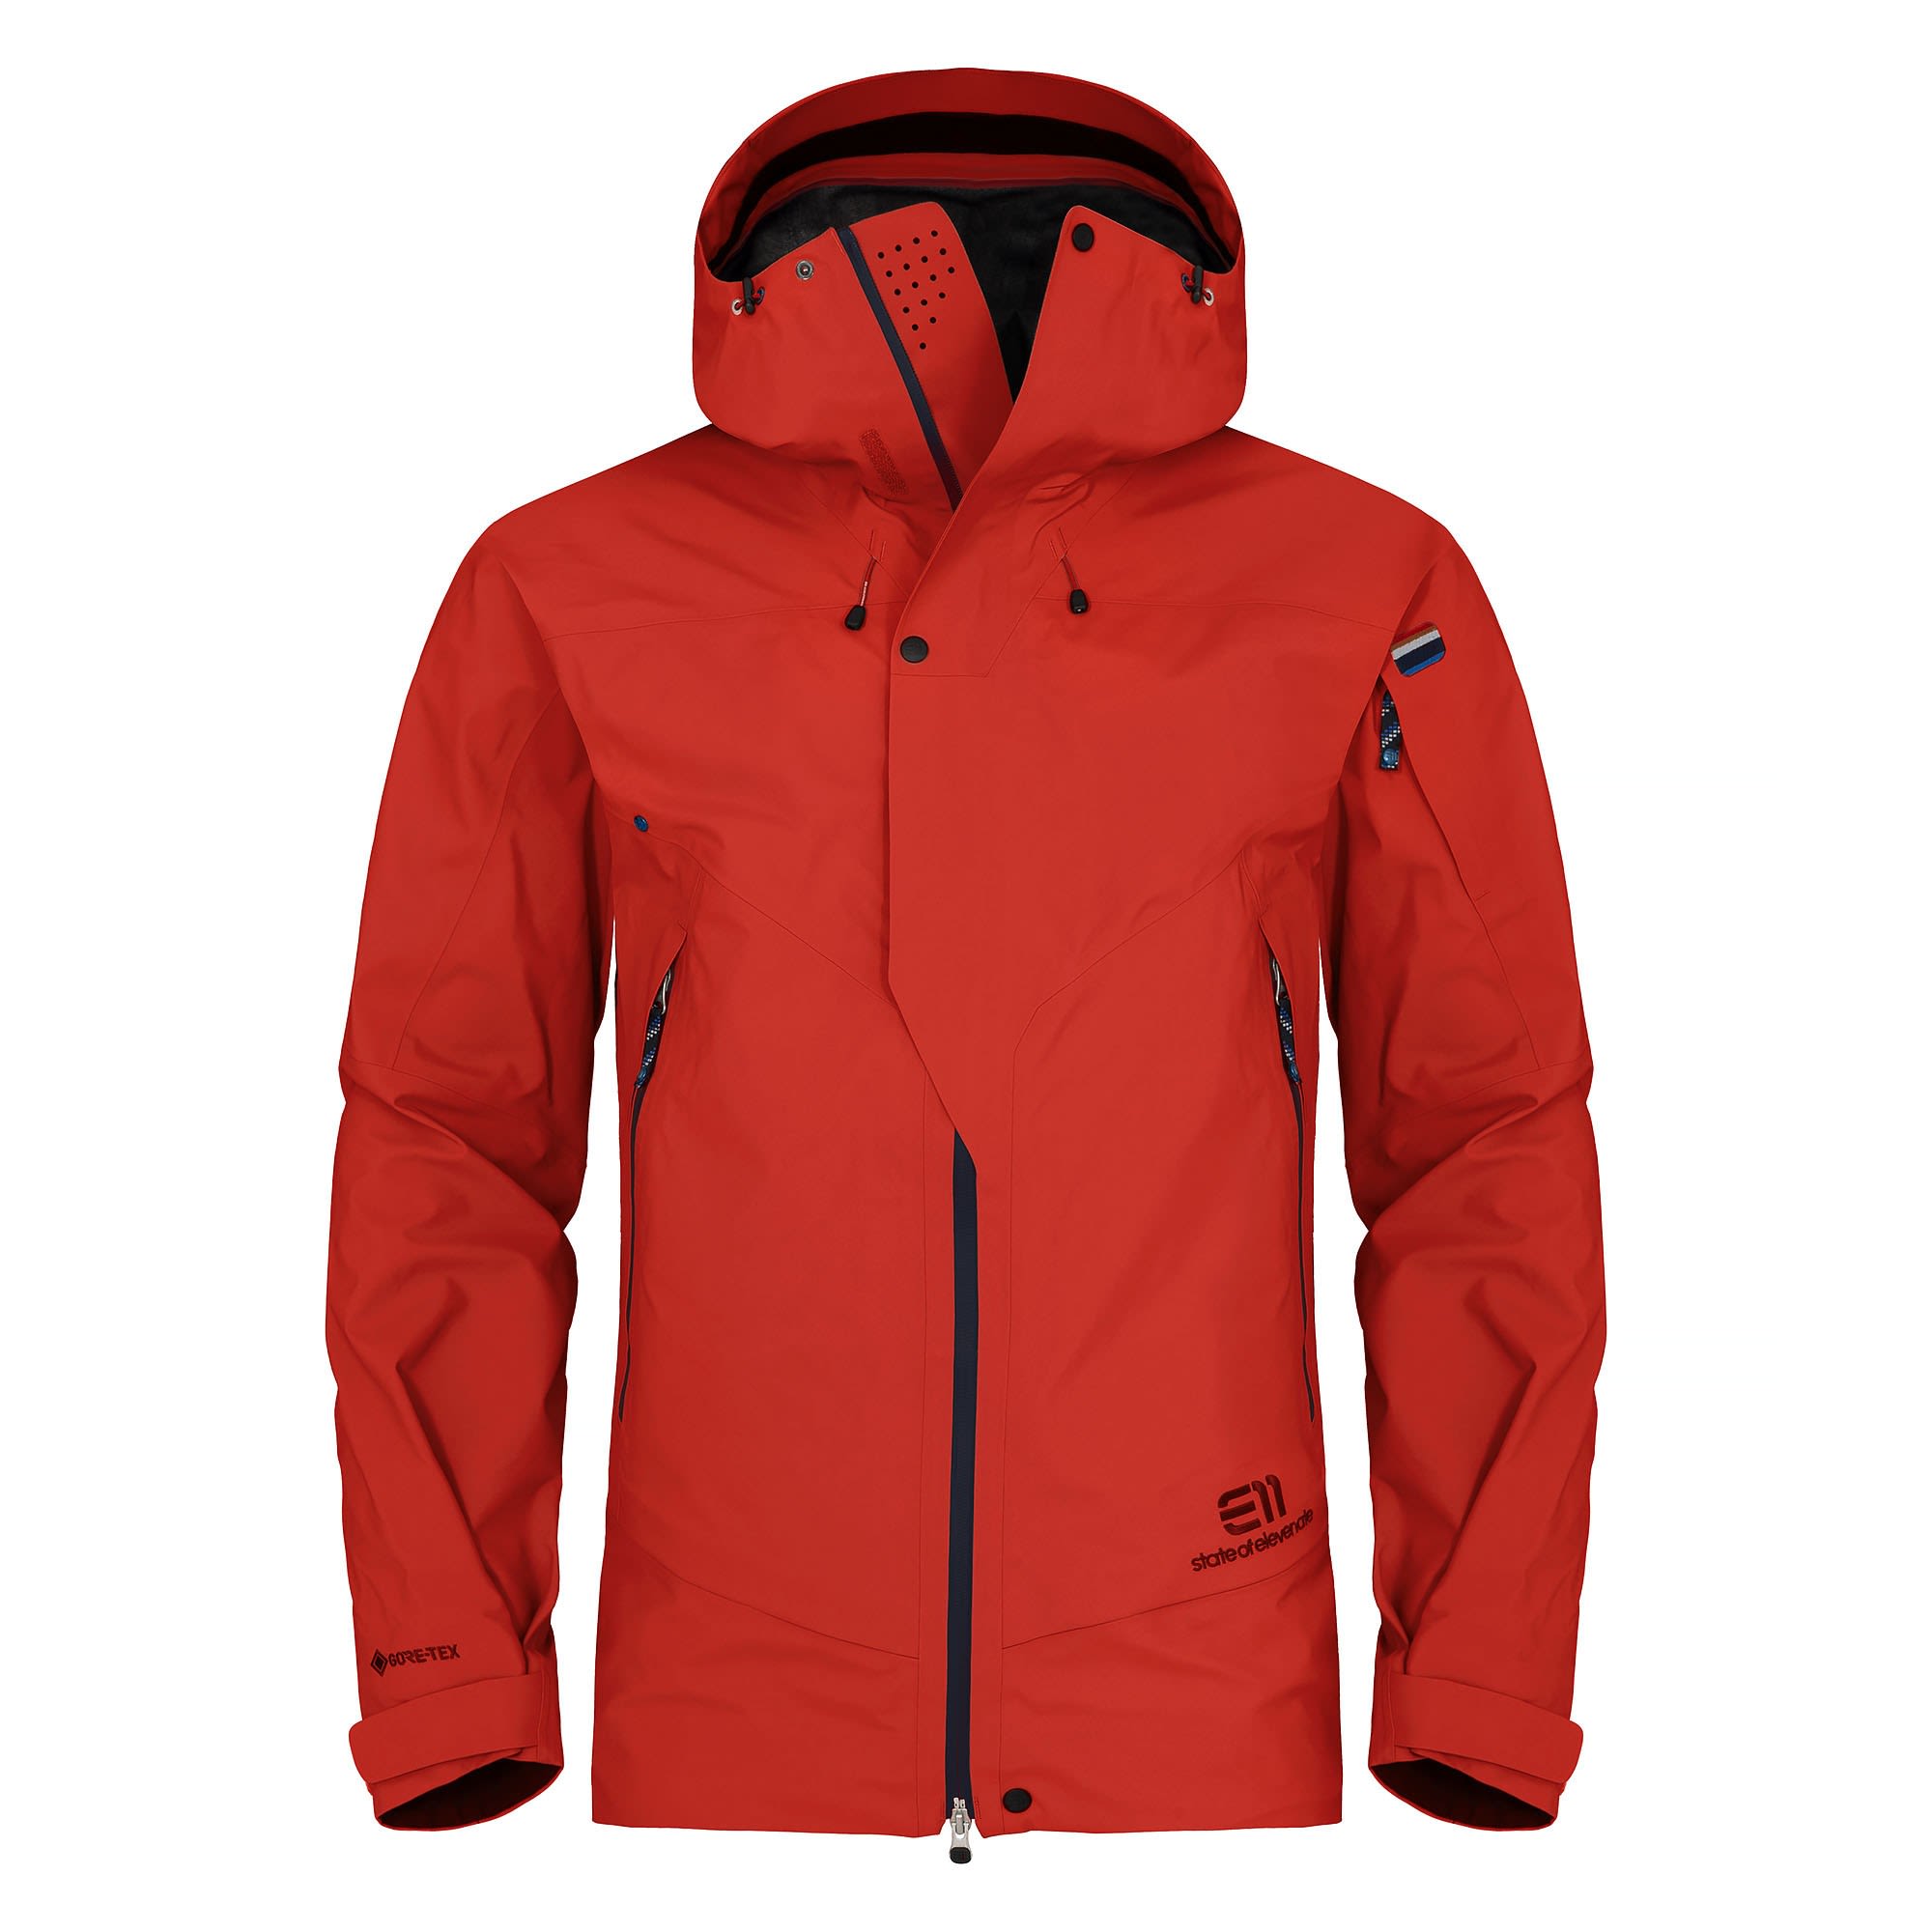 Elevenate Pure Jacket Rot- Male Gore-Tex(R) Anoraks- Grsse M - Farbe Red Glow unter Elevenate